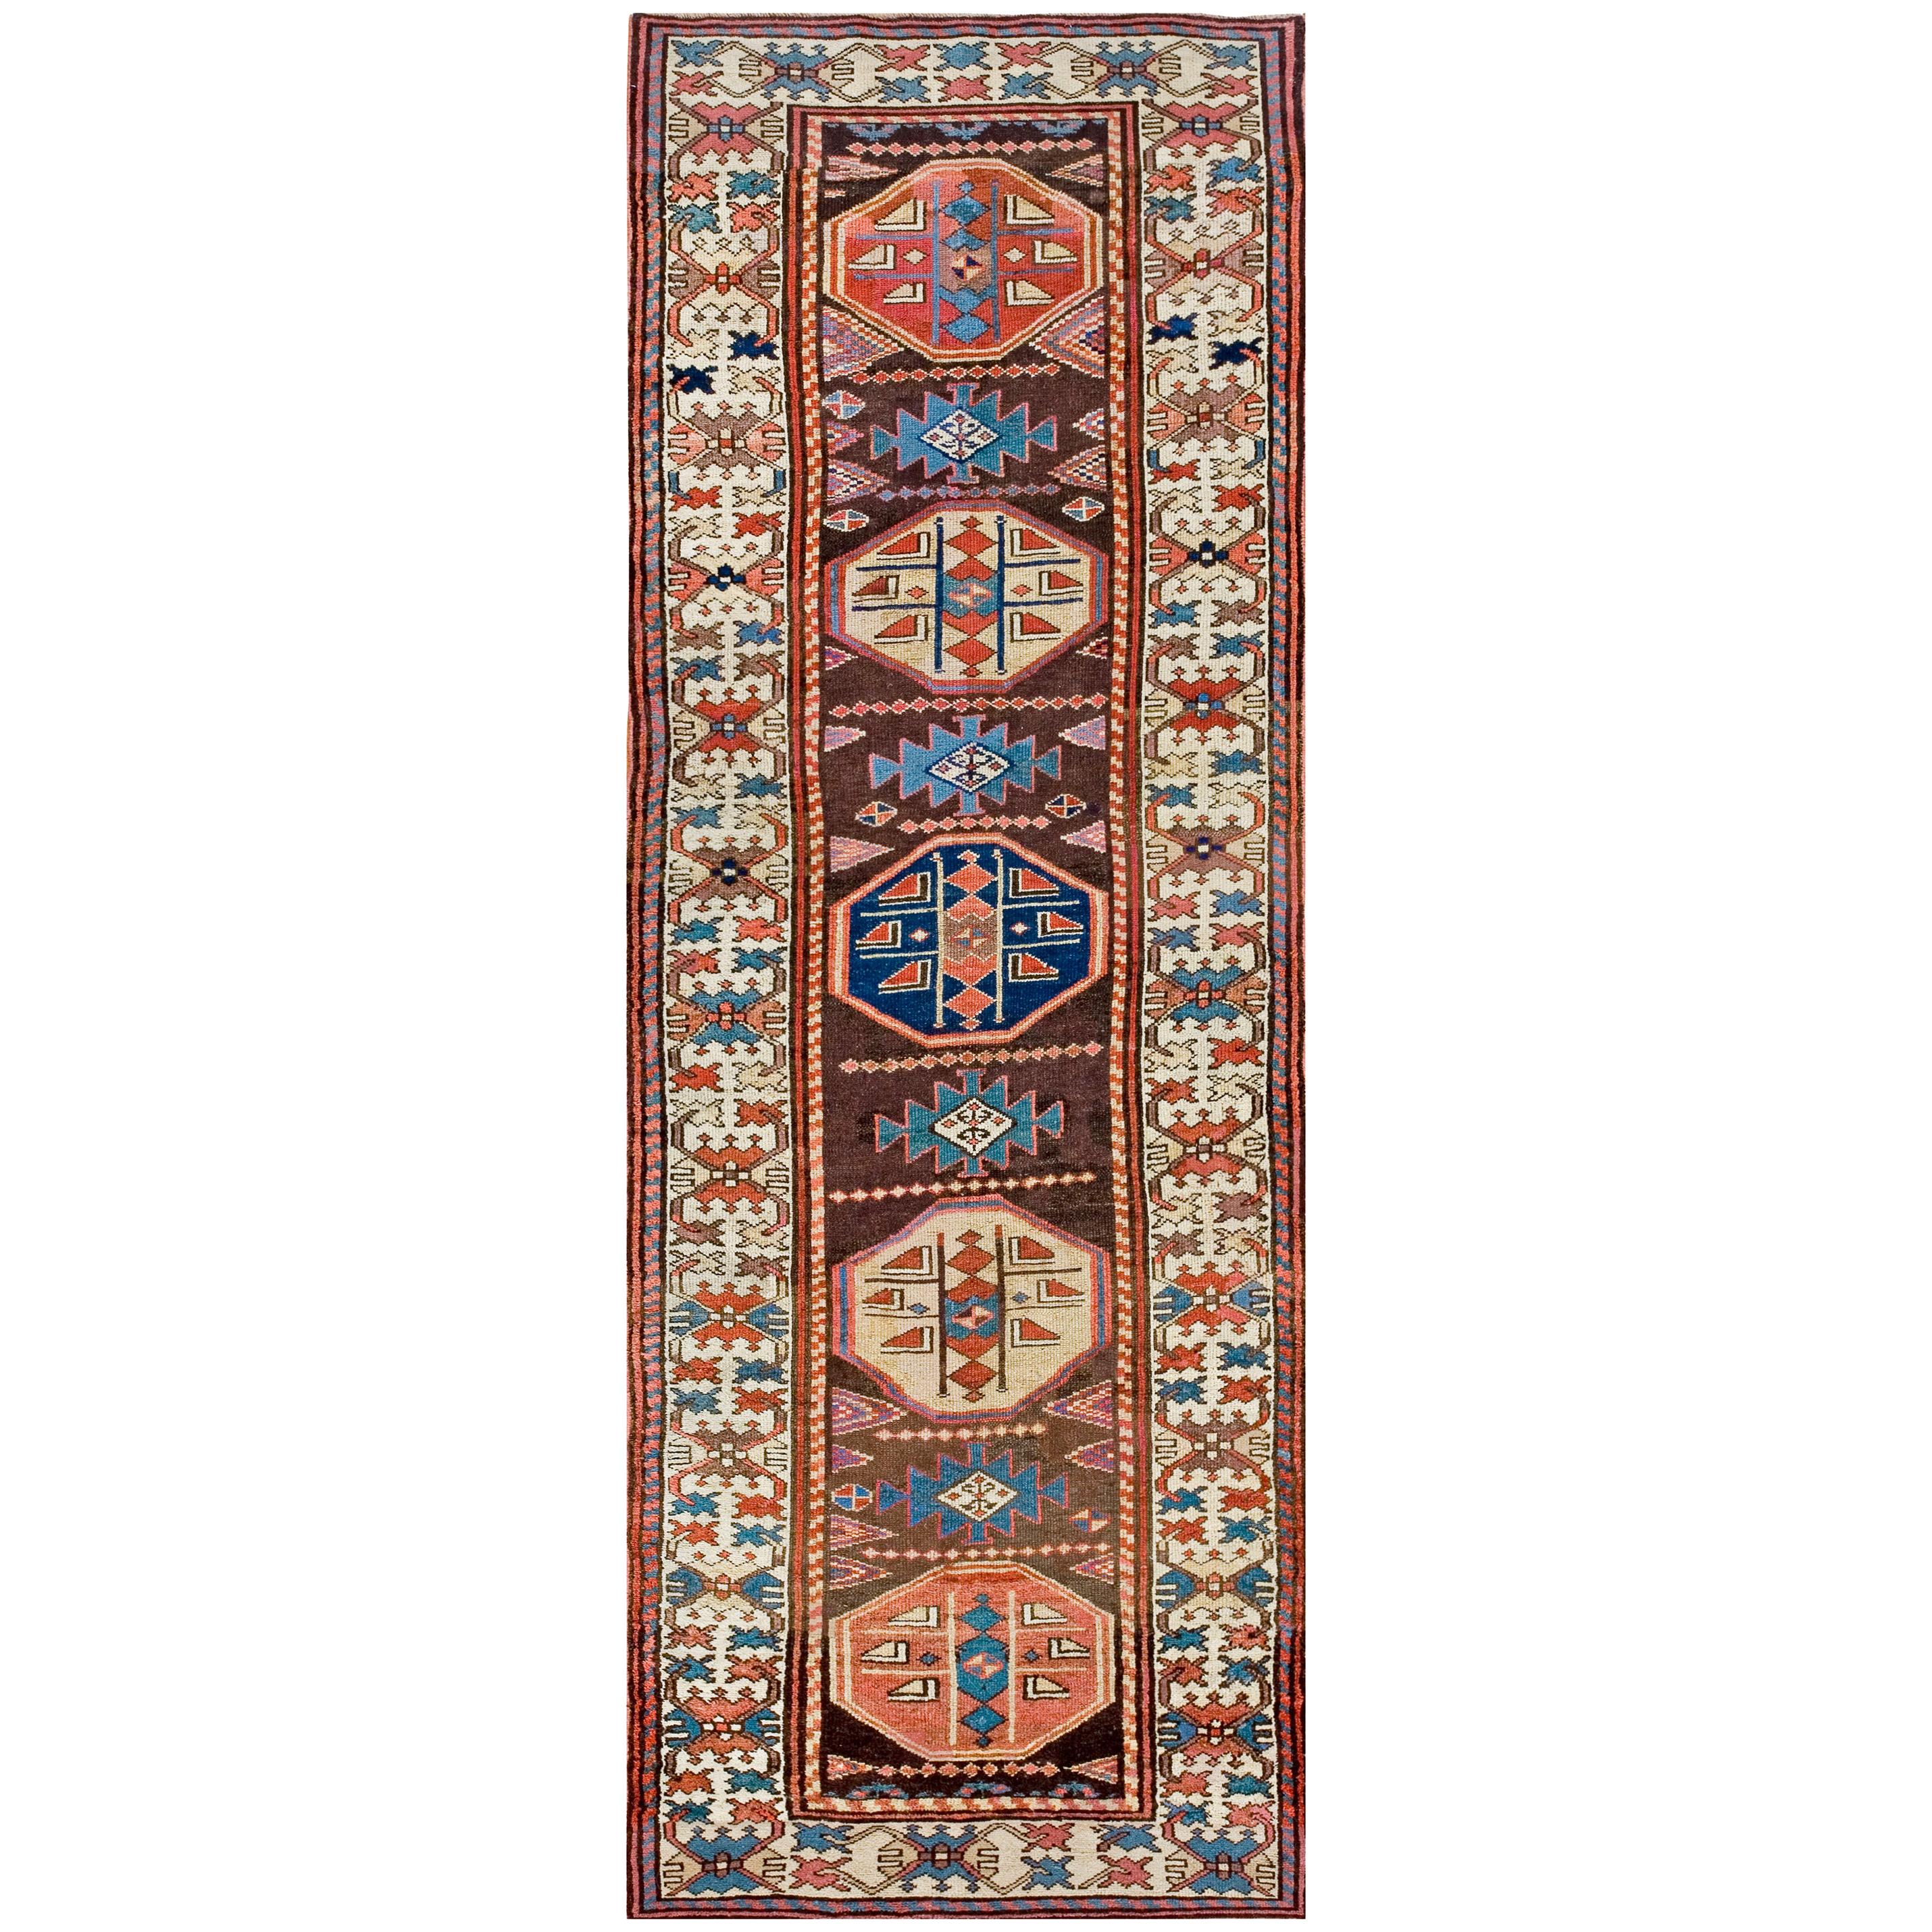 19th Century W. Persian Kurdish Carpet ( 3'5" x 8'3" - 105 x 252 )